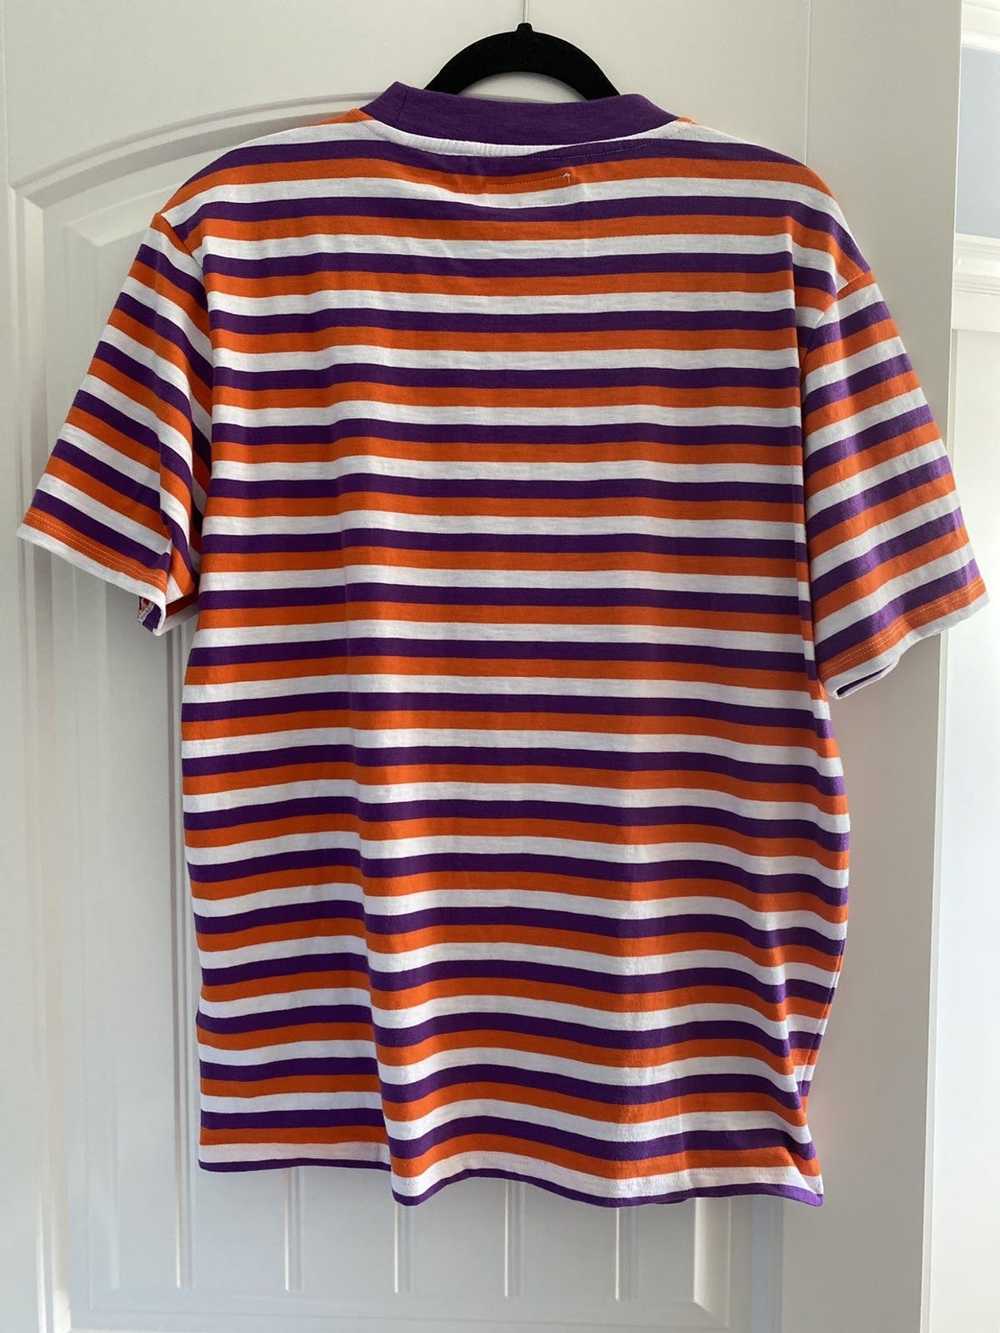 Guess Guess 88Rising striped shirt - image 3